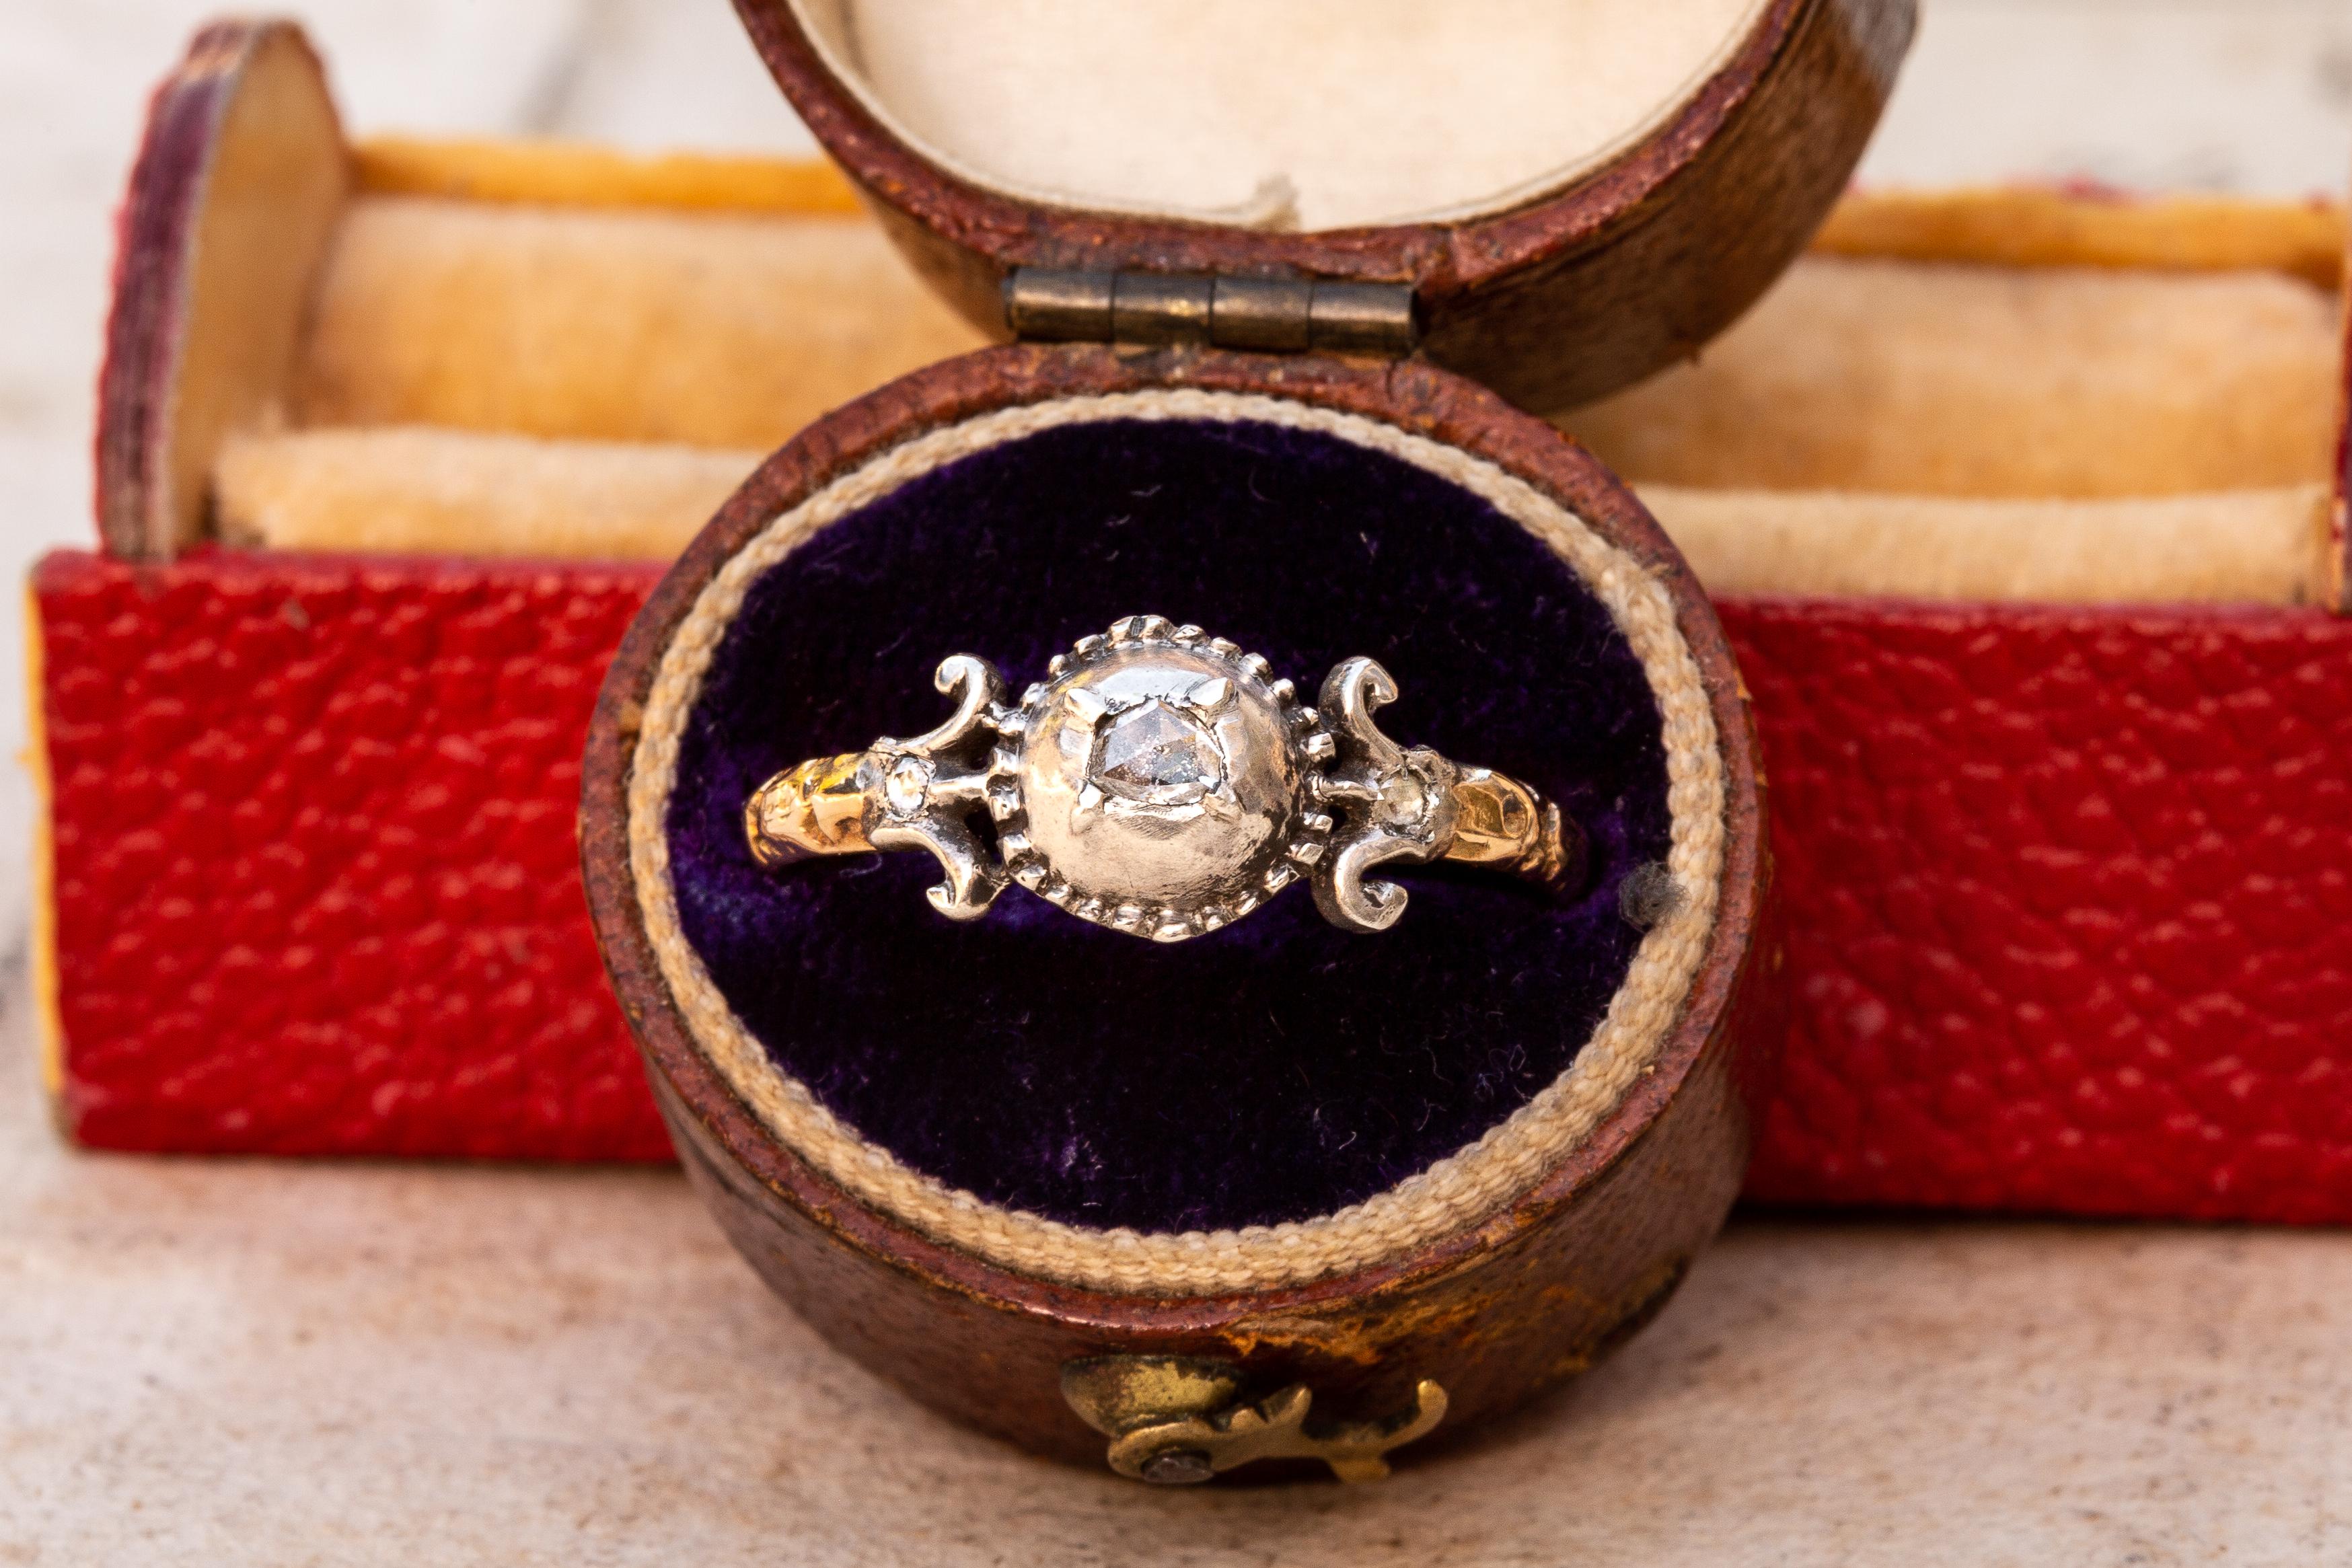 18th century engagement ring